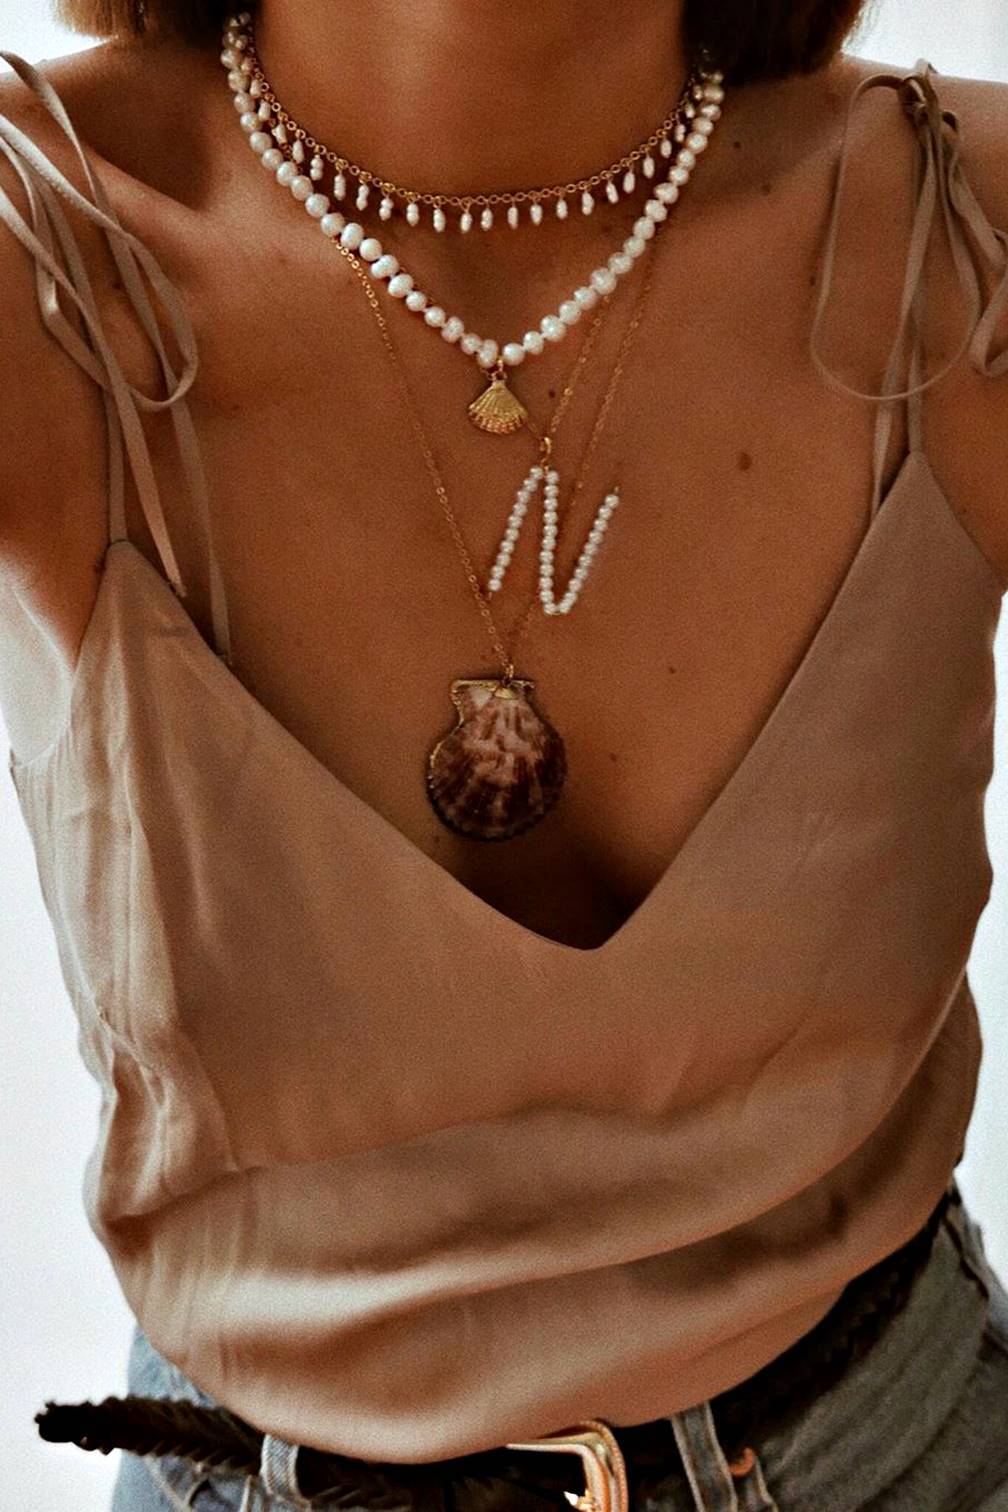 Brigitte "La Mer" Necklace - Boutique Minimaliste has waterproof, durable, elegant and vintage inspired jewelry